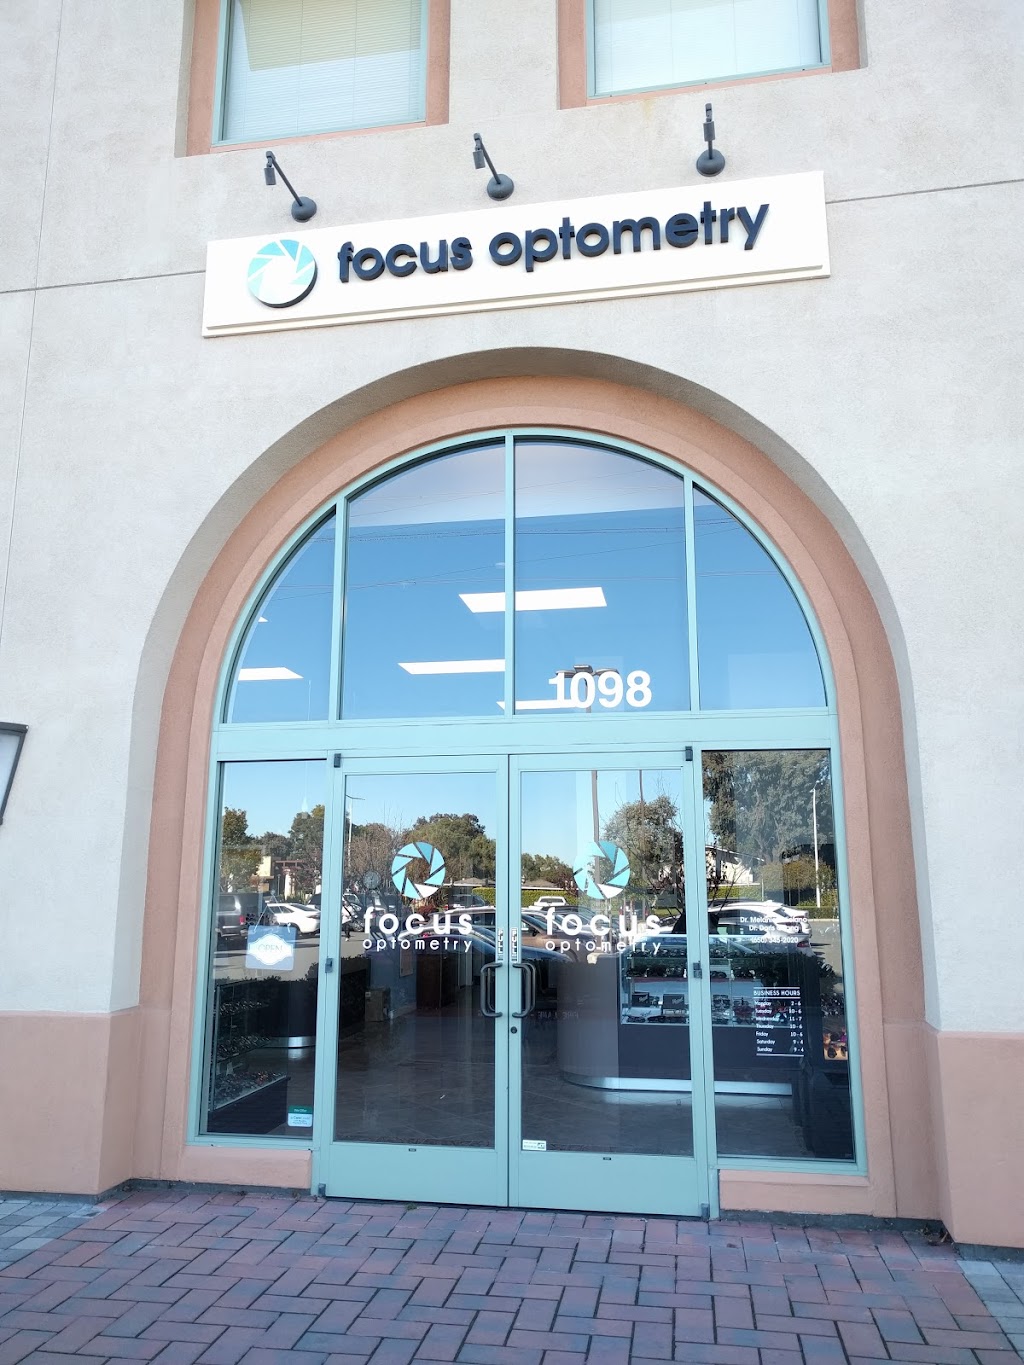 Focus Optometry | 1098 Foster City Blvd #105, Foster City, CA 94404 | Phone: (650) 345-2020